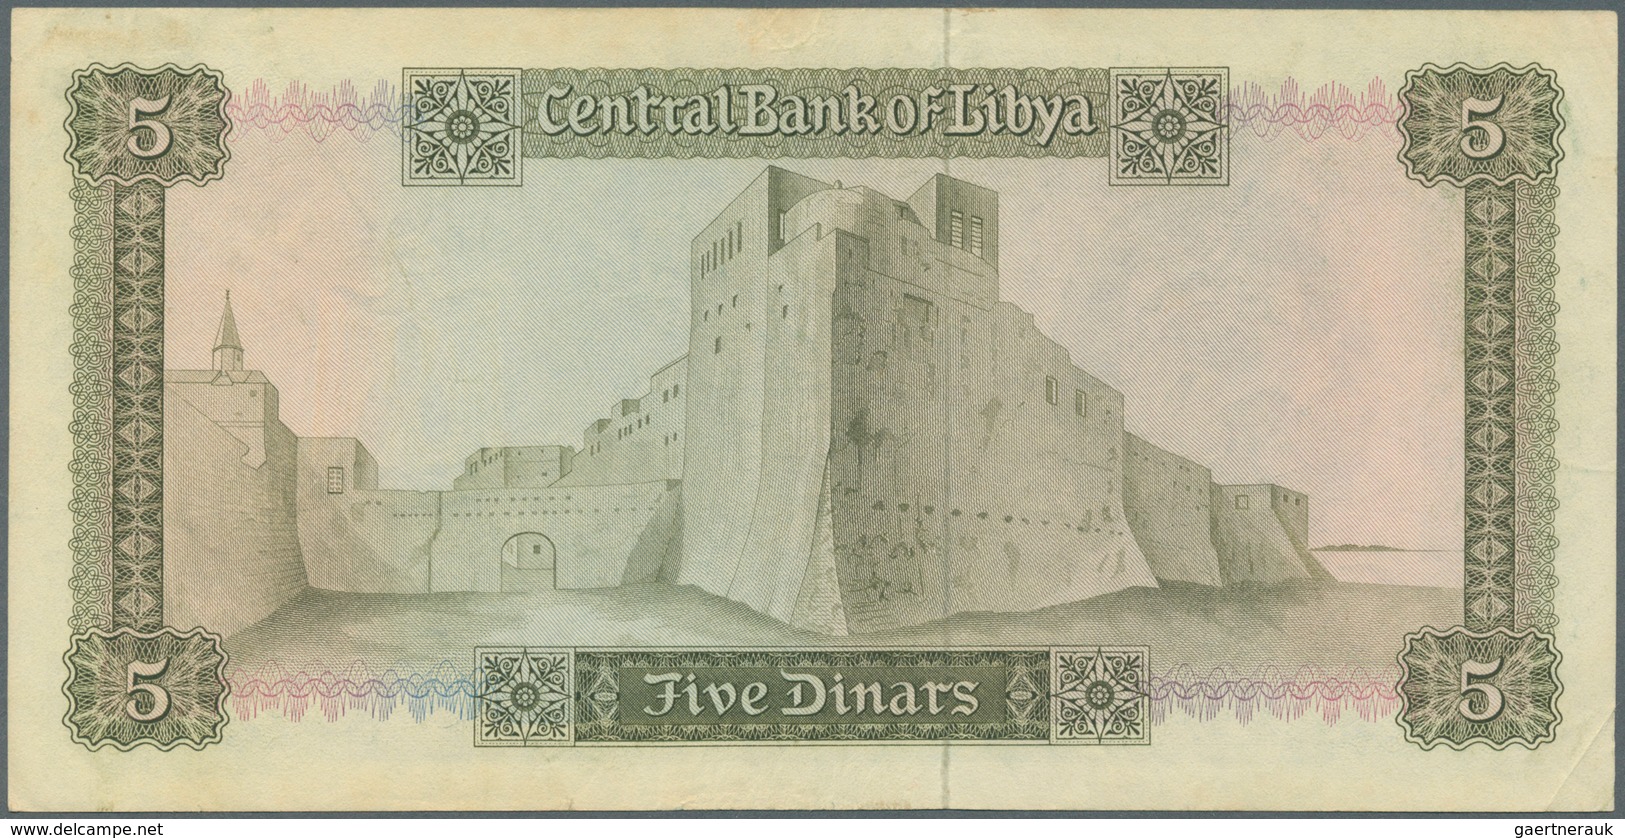 Libya / Libyen: 5 Dinars ND(1971) Without Inscription At Lower Right On Front, P.36a, Still Strong P - Libya